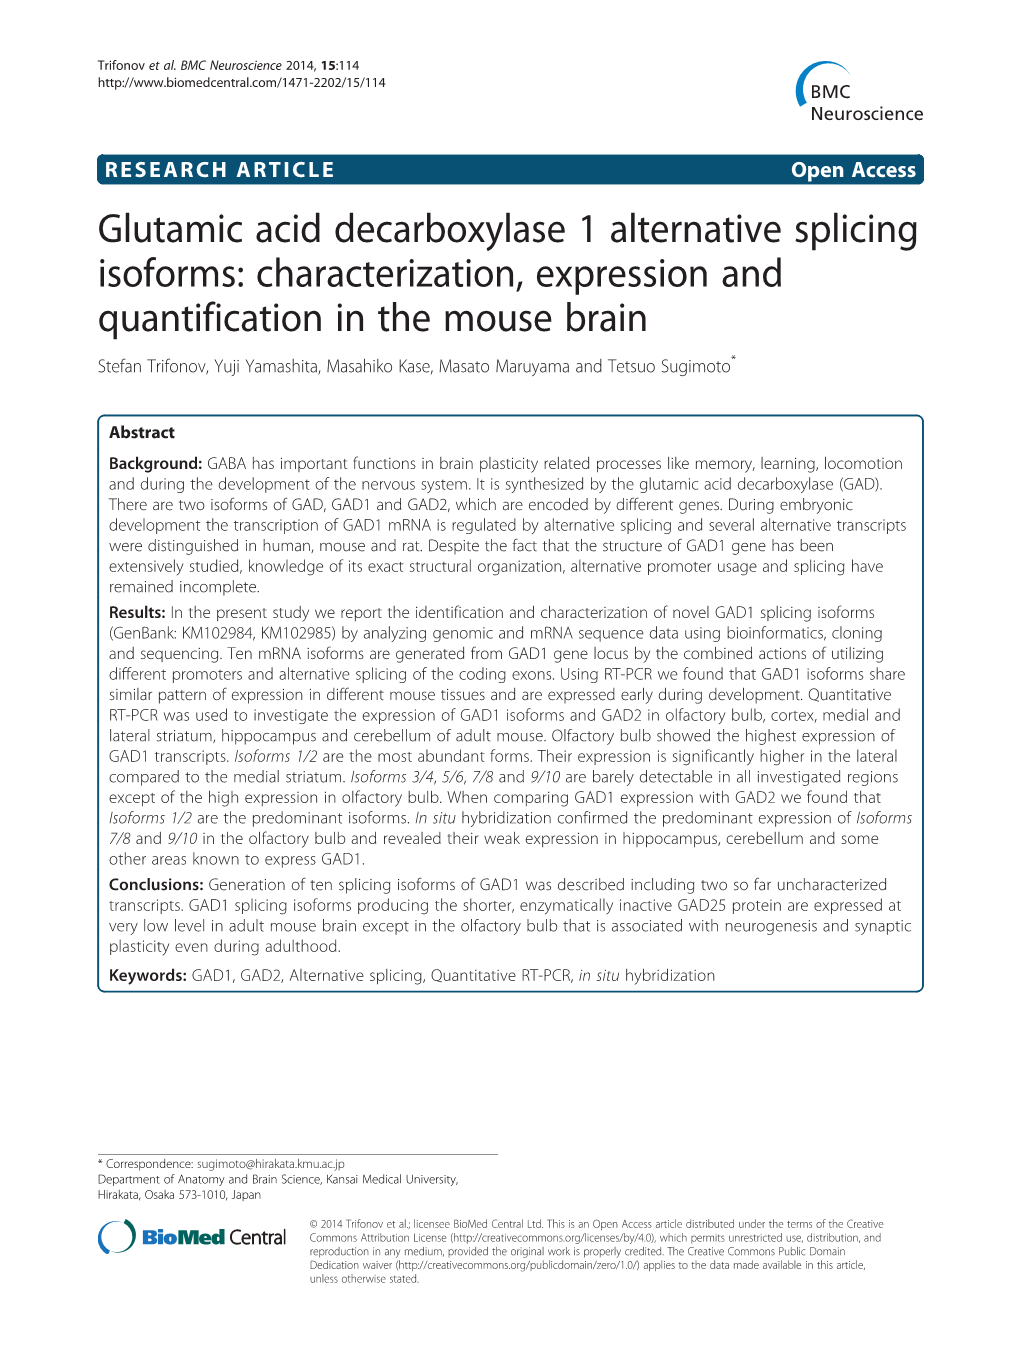 Glutamic Acid Decarboxylase 1 Alternative Splicing